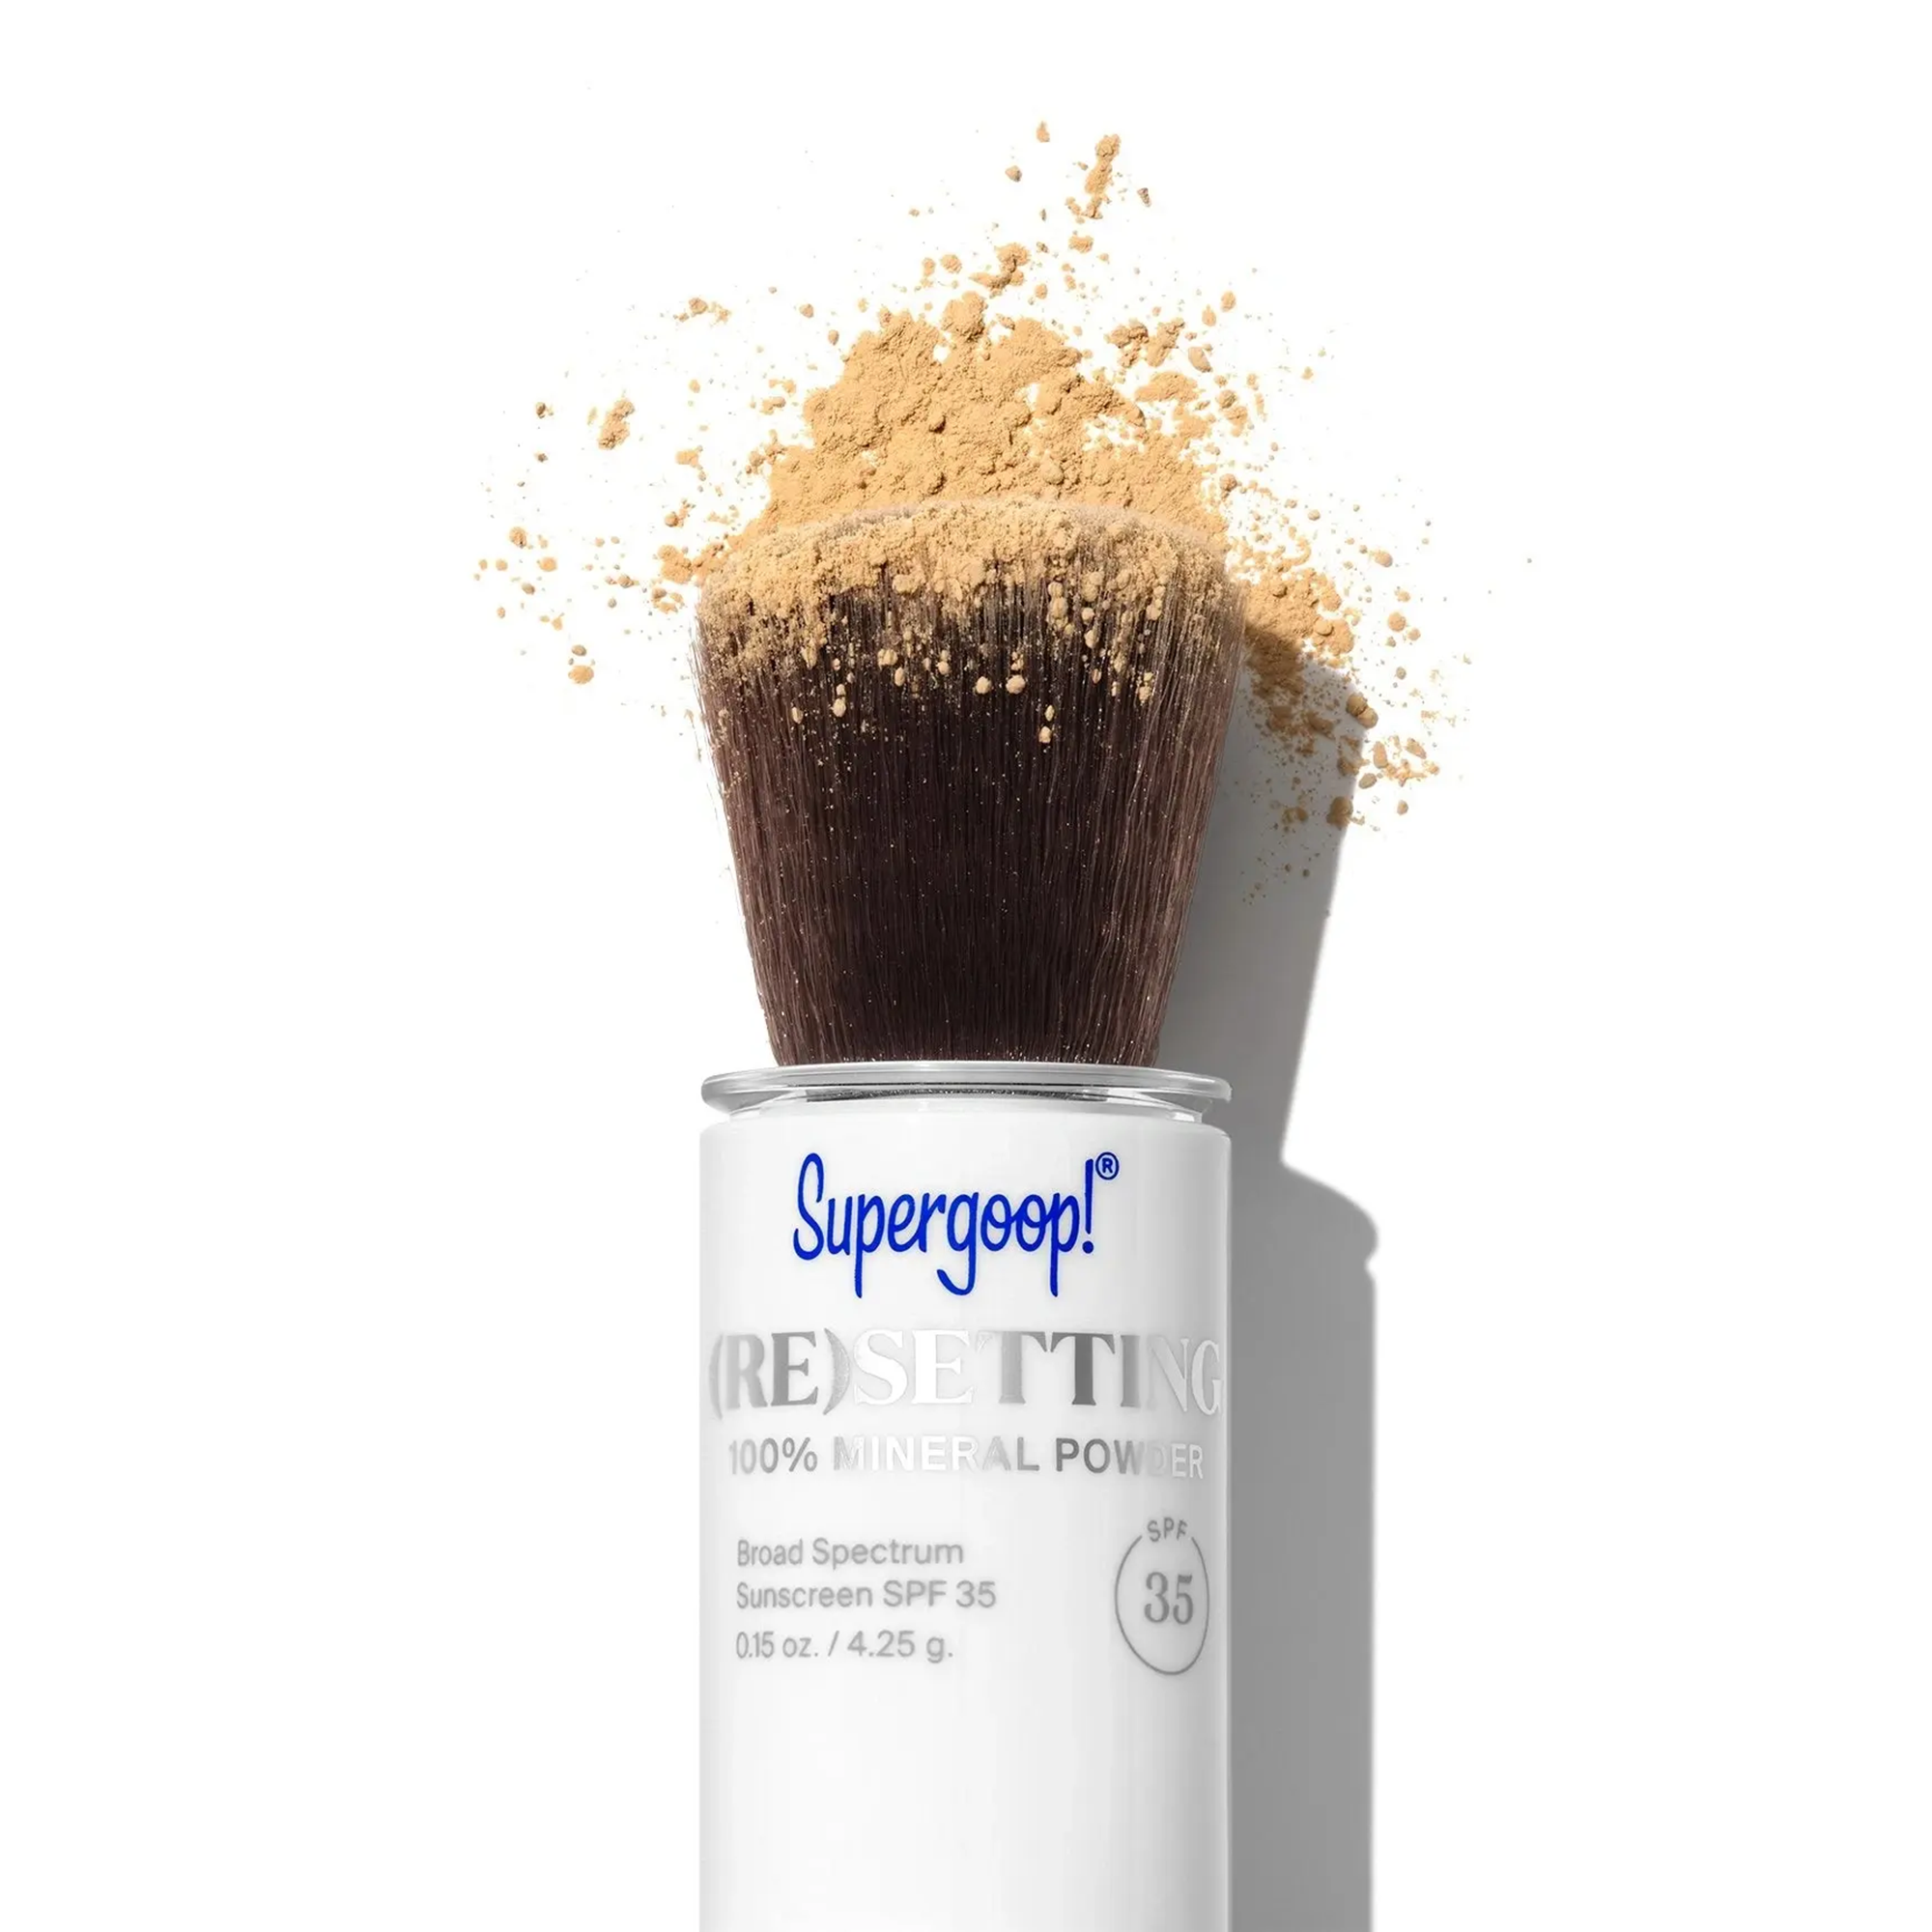 Supergoop! (Re)setting 100% Mineral Powder SPF 35 / MEDIUM